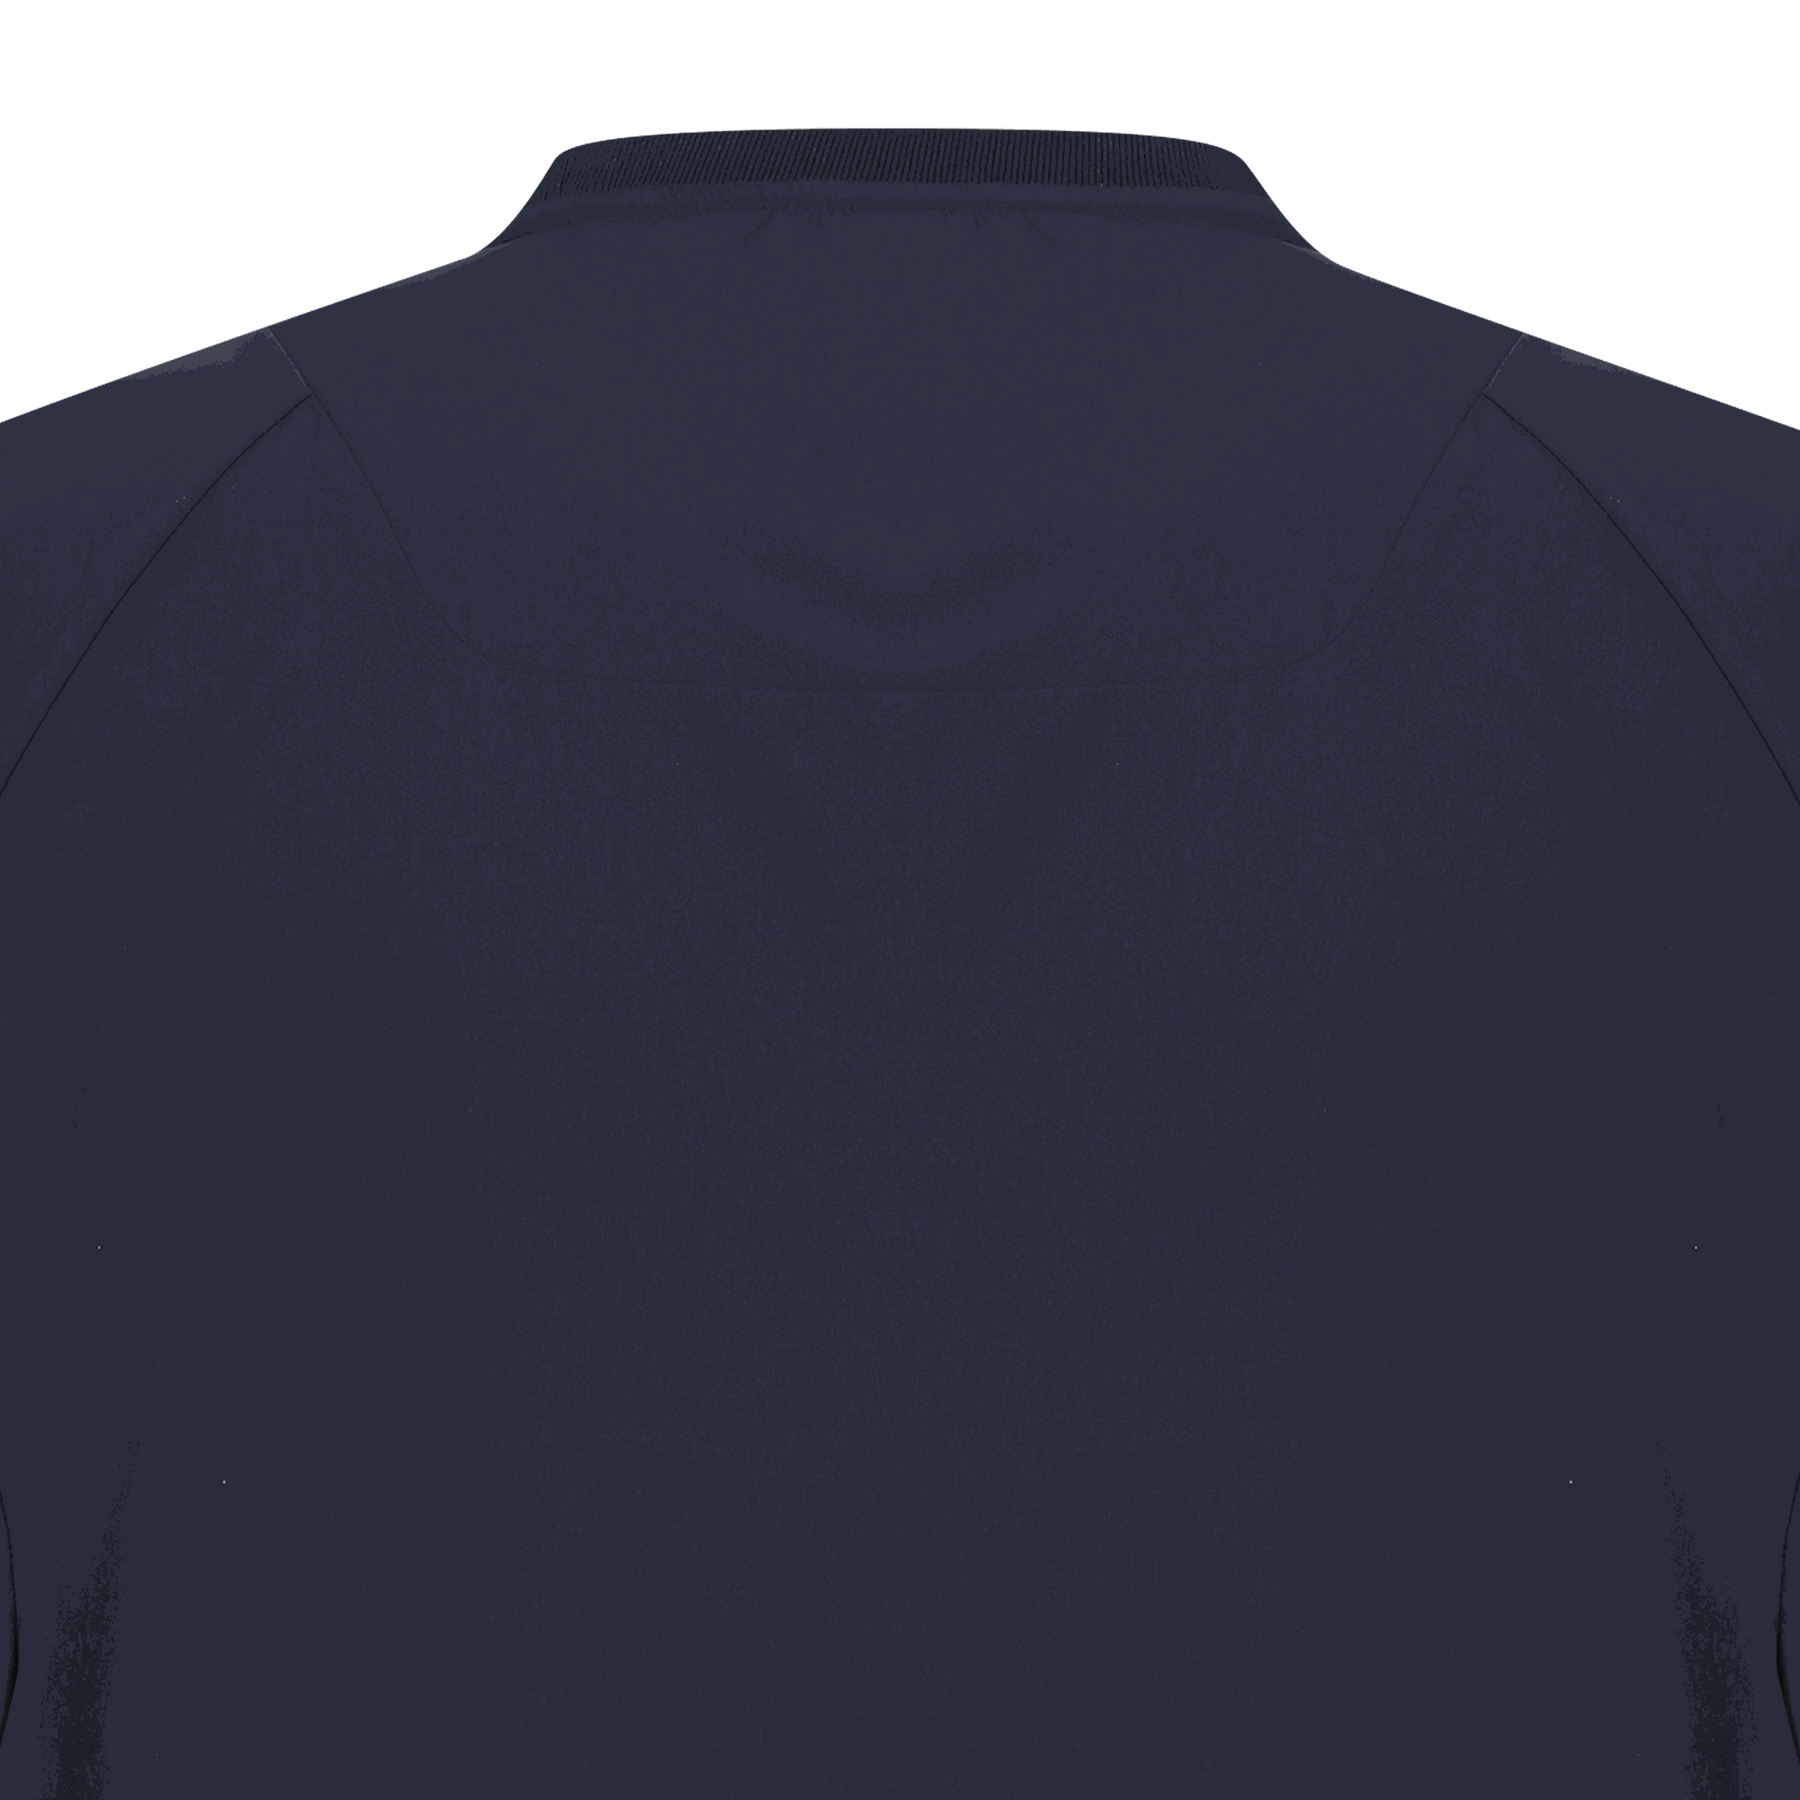 Áo thể thao PROSPECS Nam TM-Clean Round Woven T-Shirt MT-M412